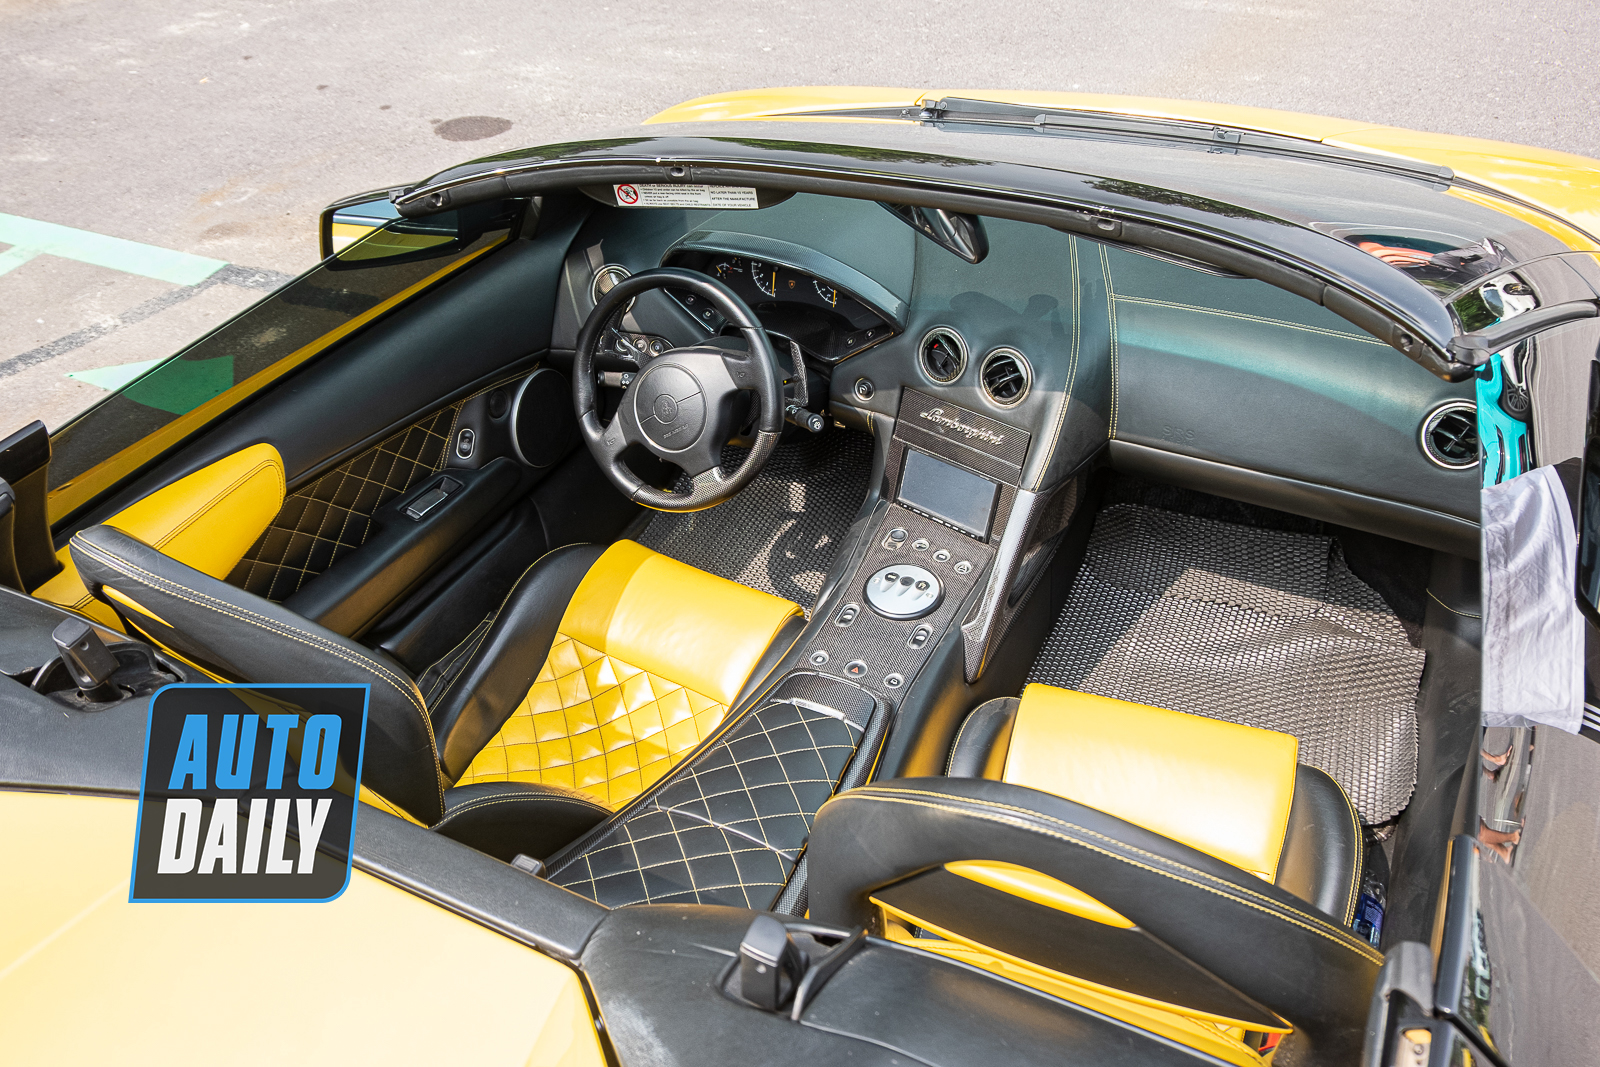 Chi tiết Lamborghini Murcielago Roadster 14 năm tuổi của doanh nhân Gia Lai lamborghini-murcielago-roadster-autodaily-12.JPG